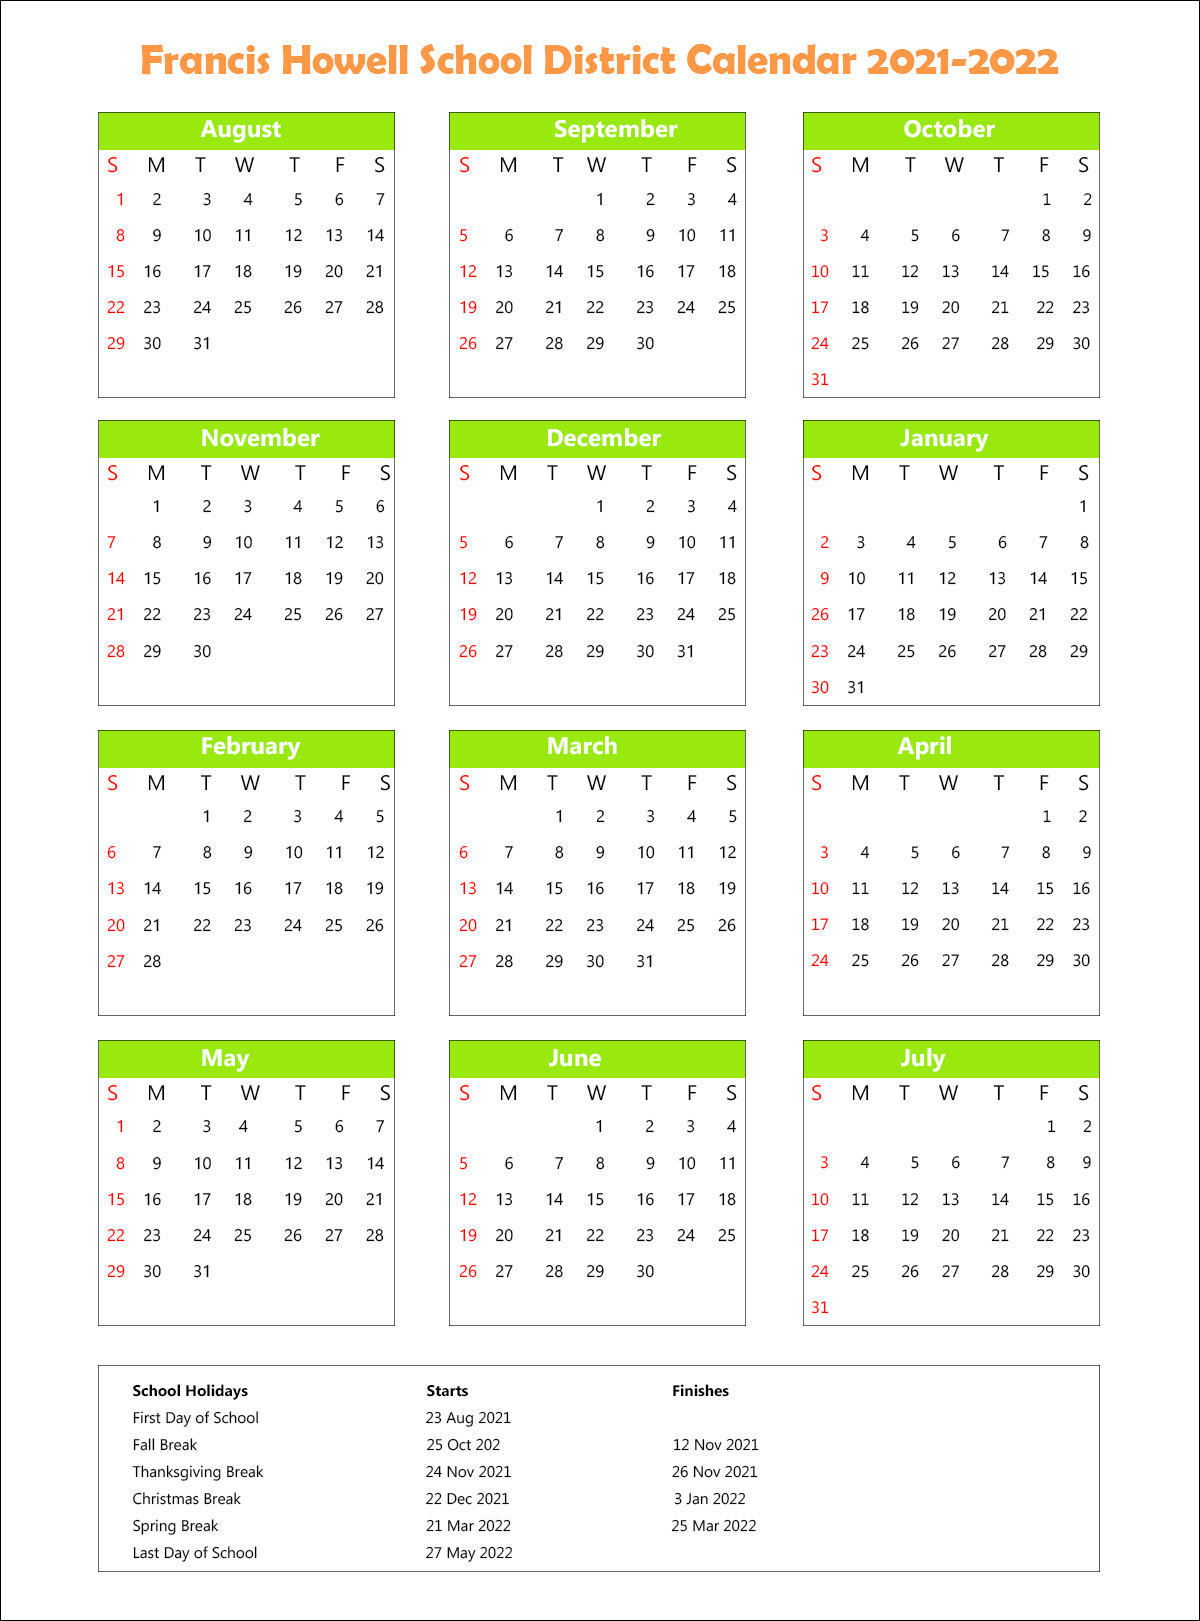 Francis Howell Calendar 2022 Francis Howell School District Calendar Holidays 2021-2022